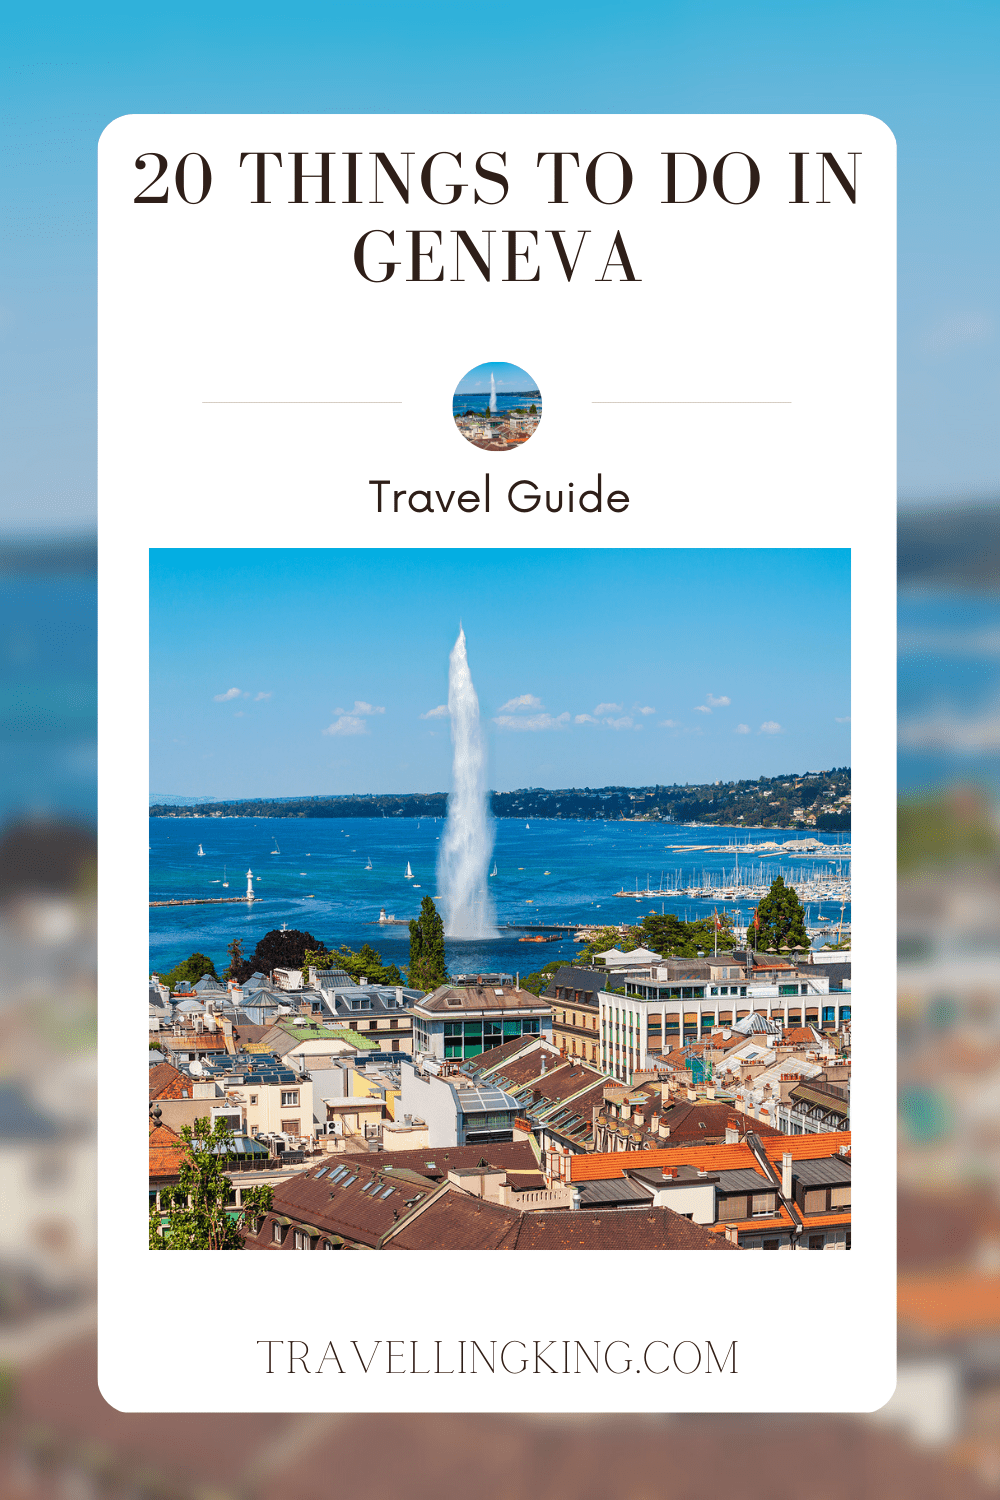 20 Things to do in Geneva